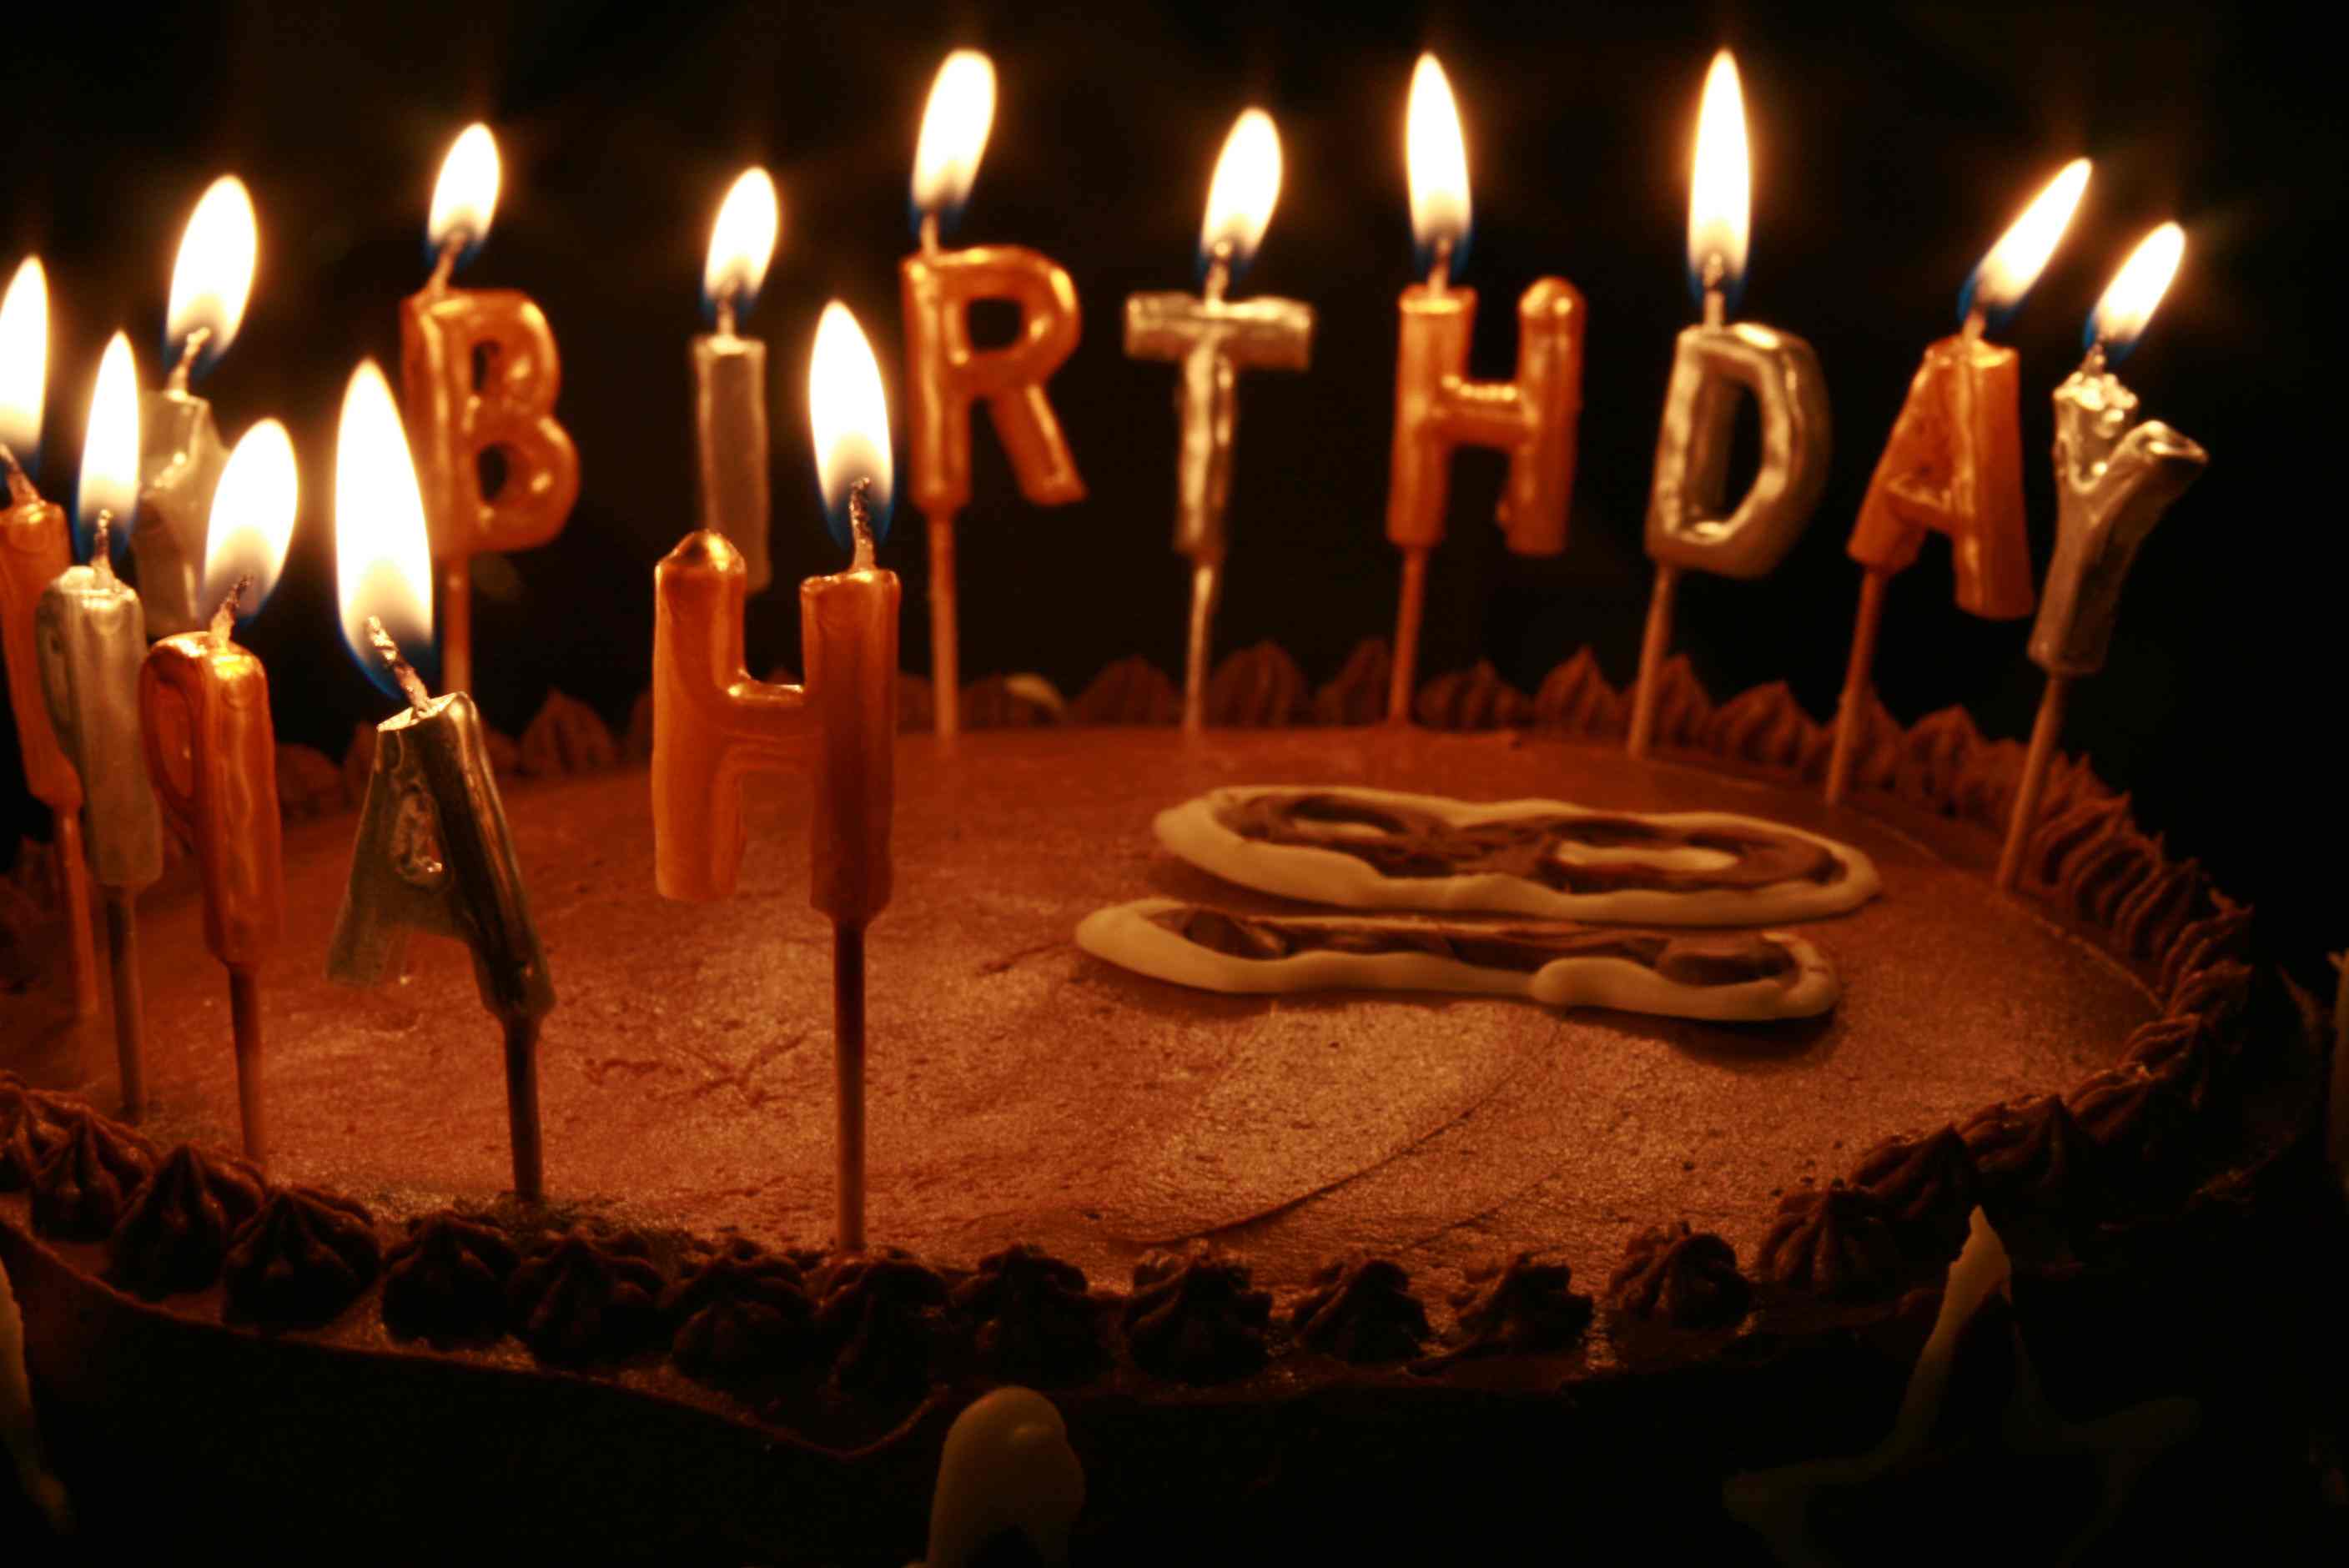 unique birthday cake candles